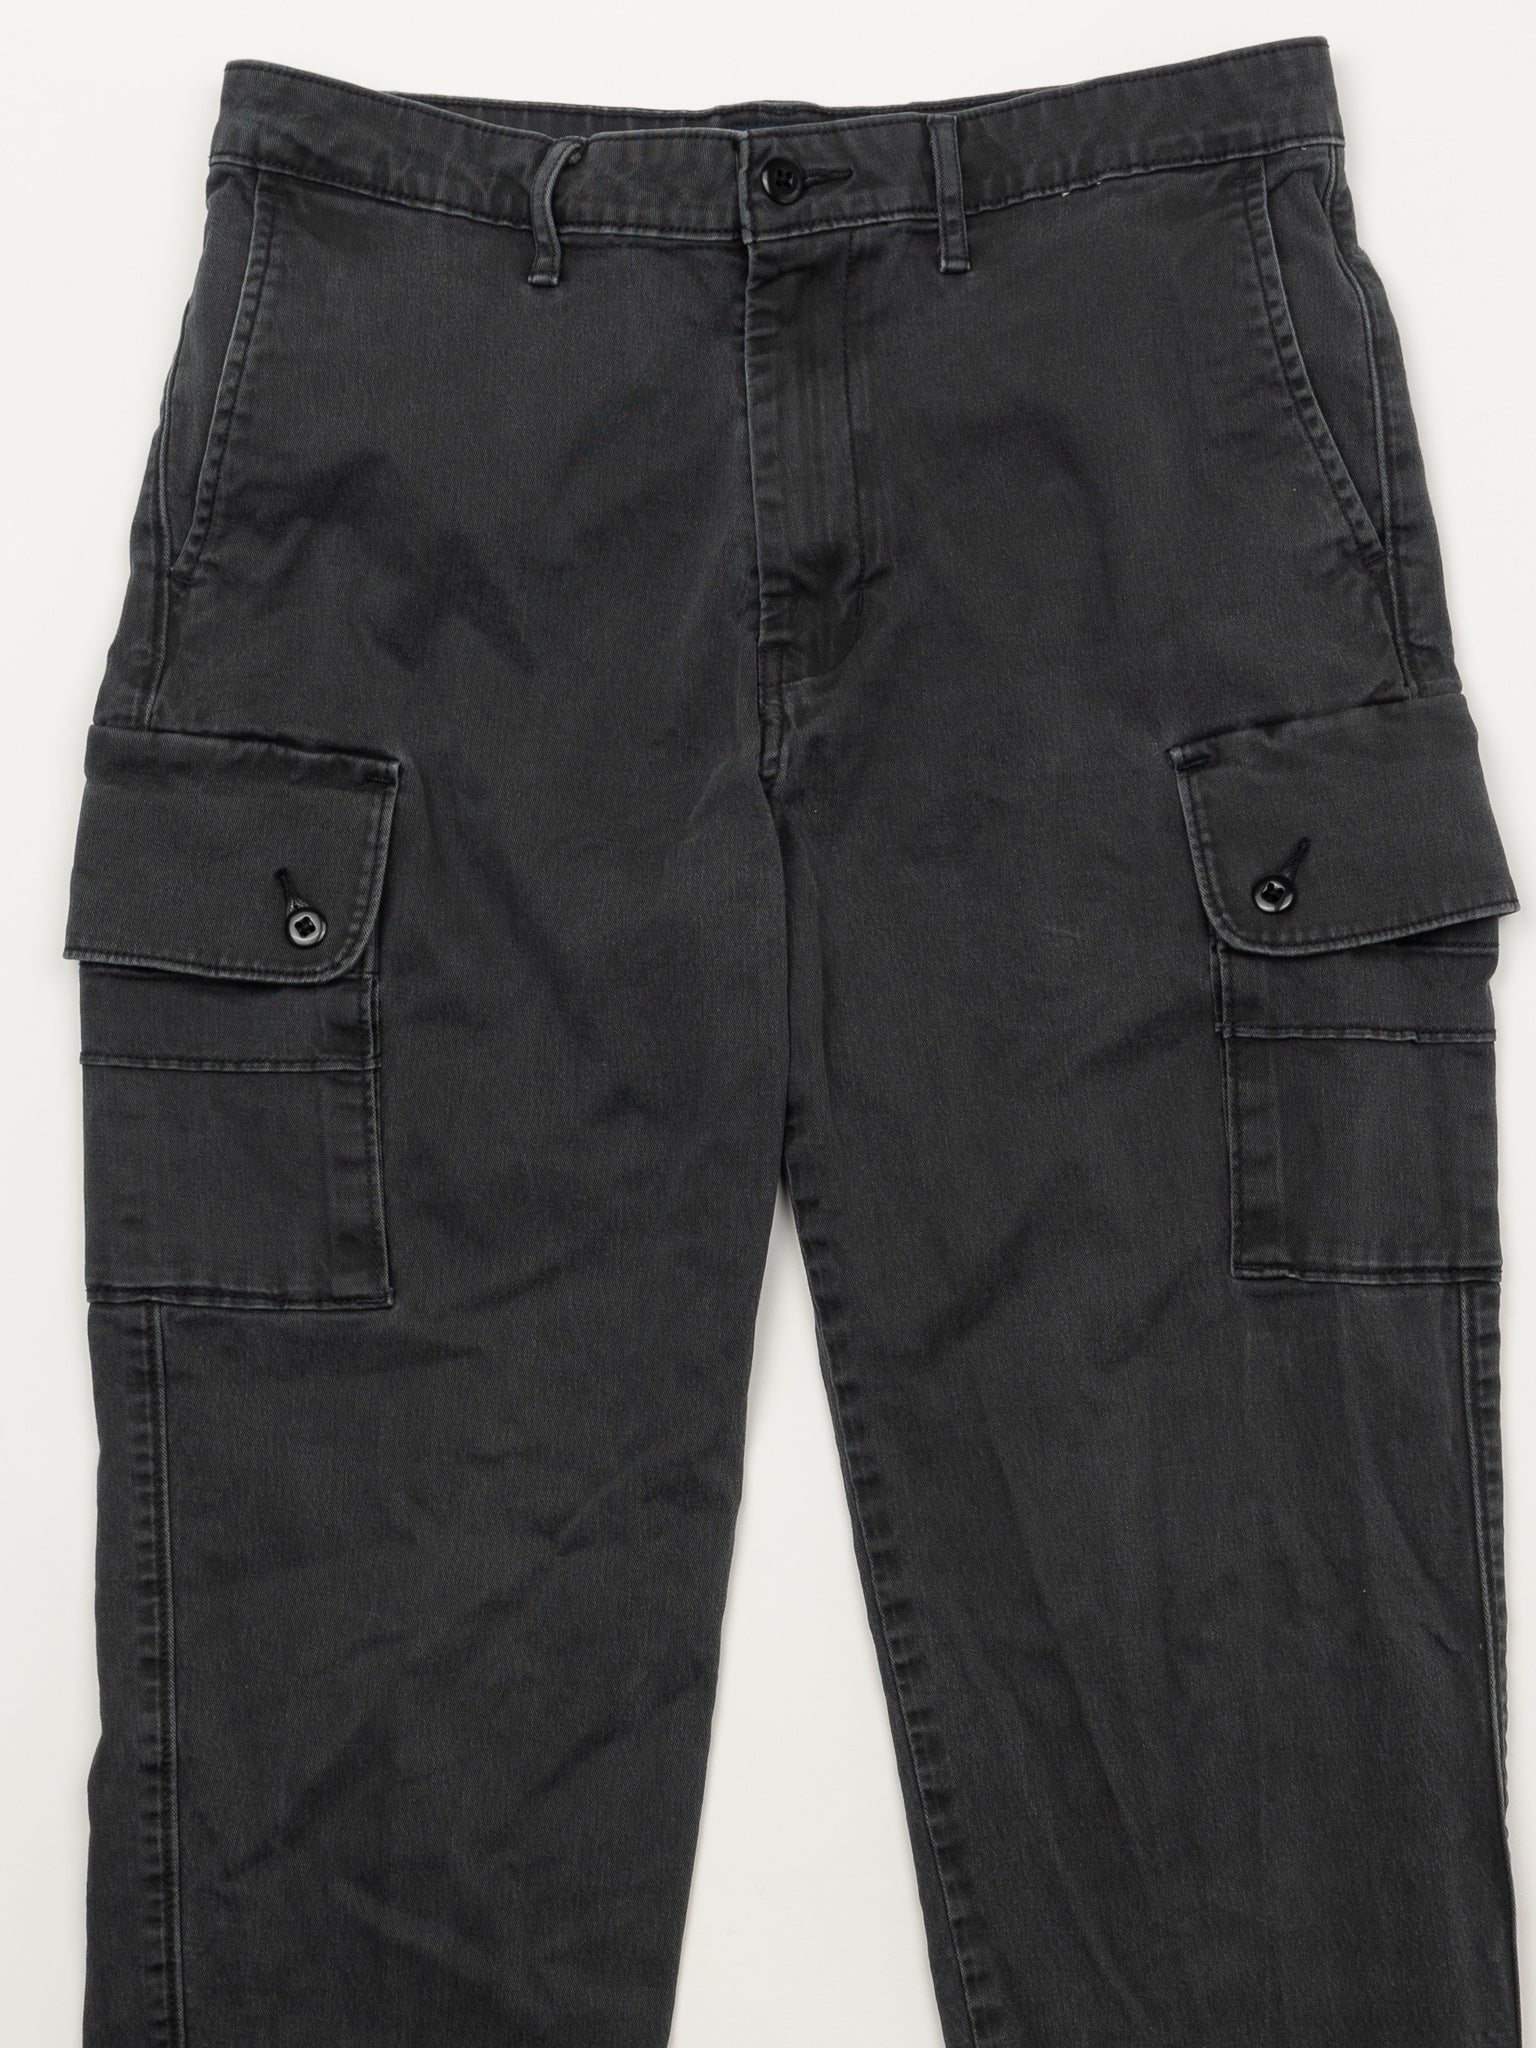 Vintage Washed Black Levi Cargo Pants (33 x 34)